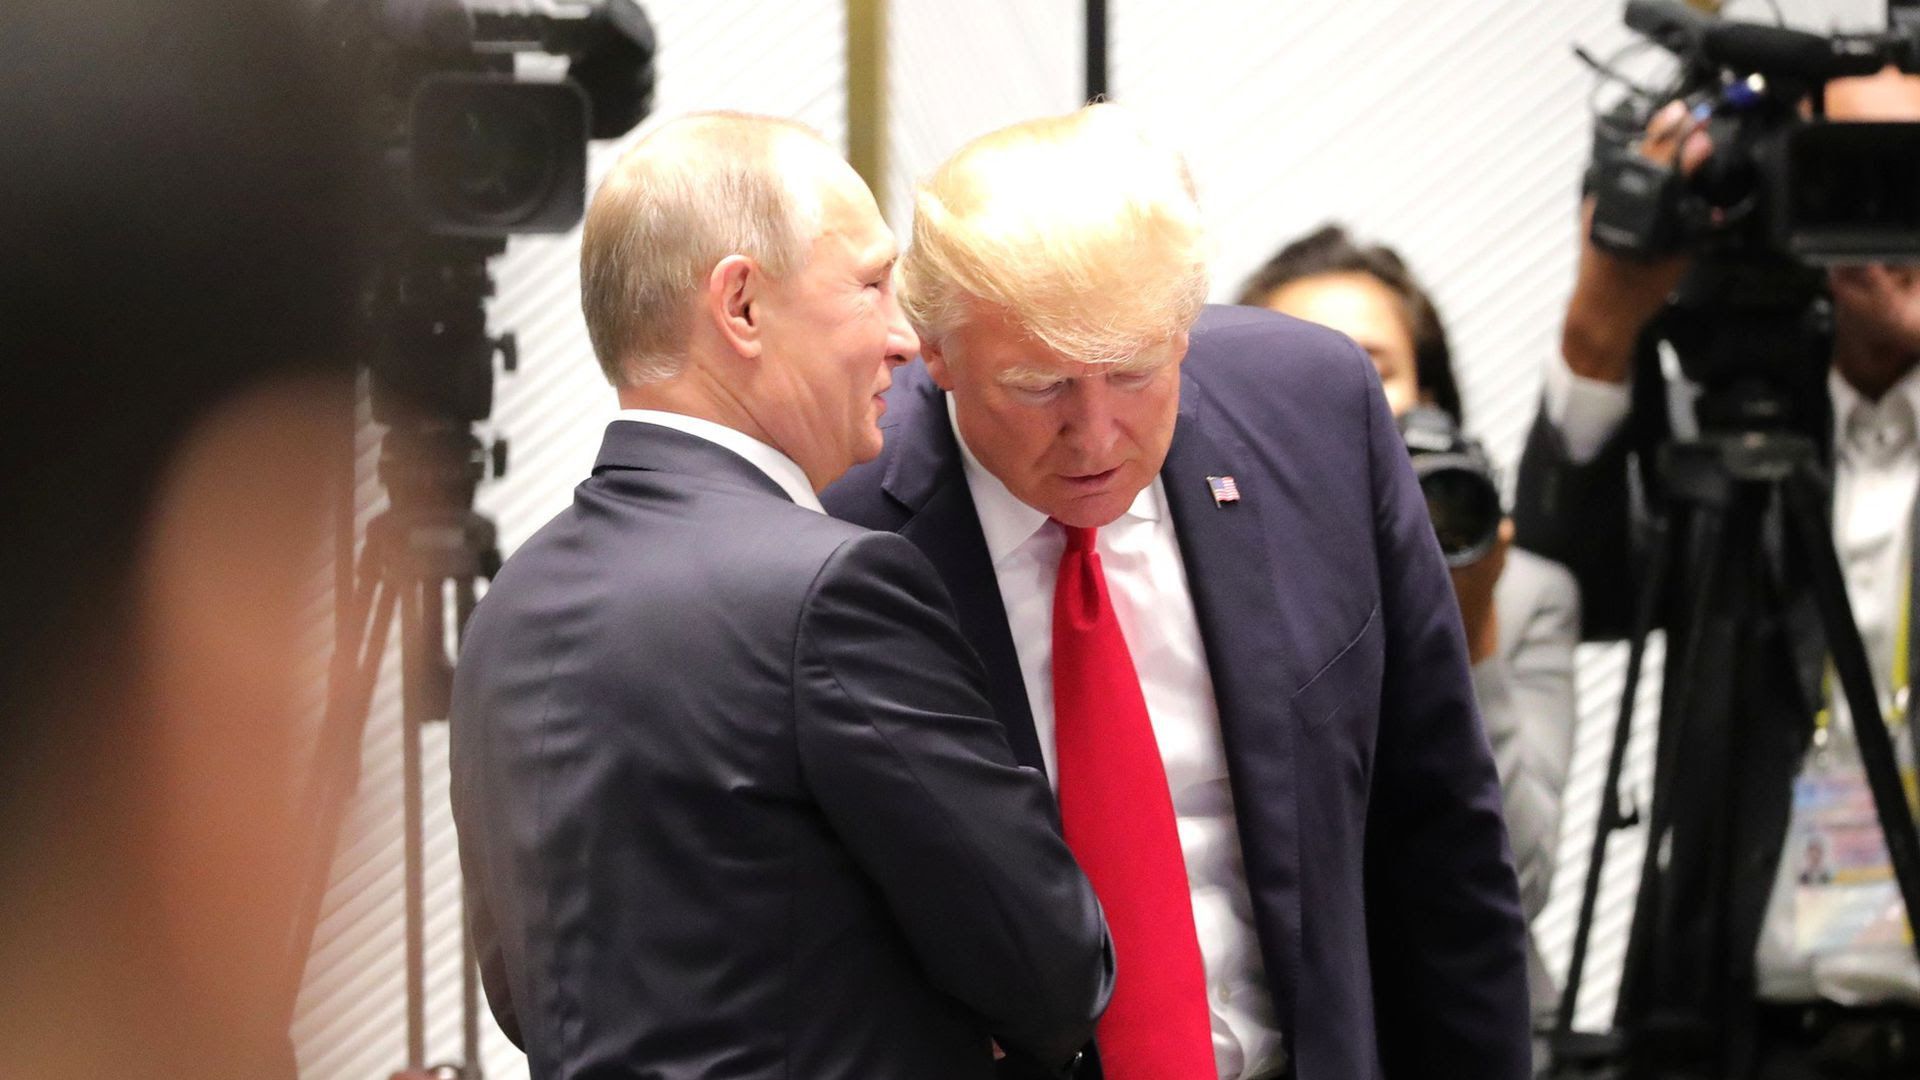 Trump leans over to hear Putin talk in his ear